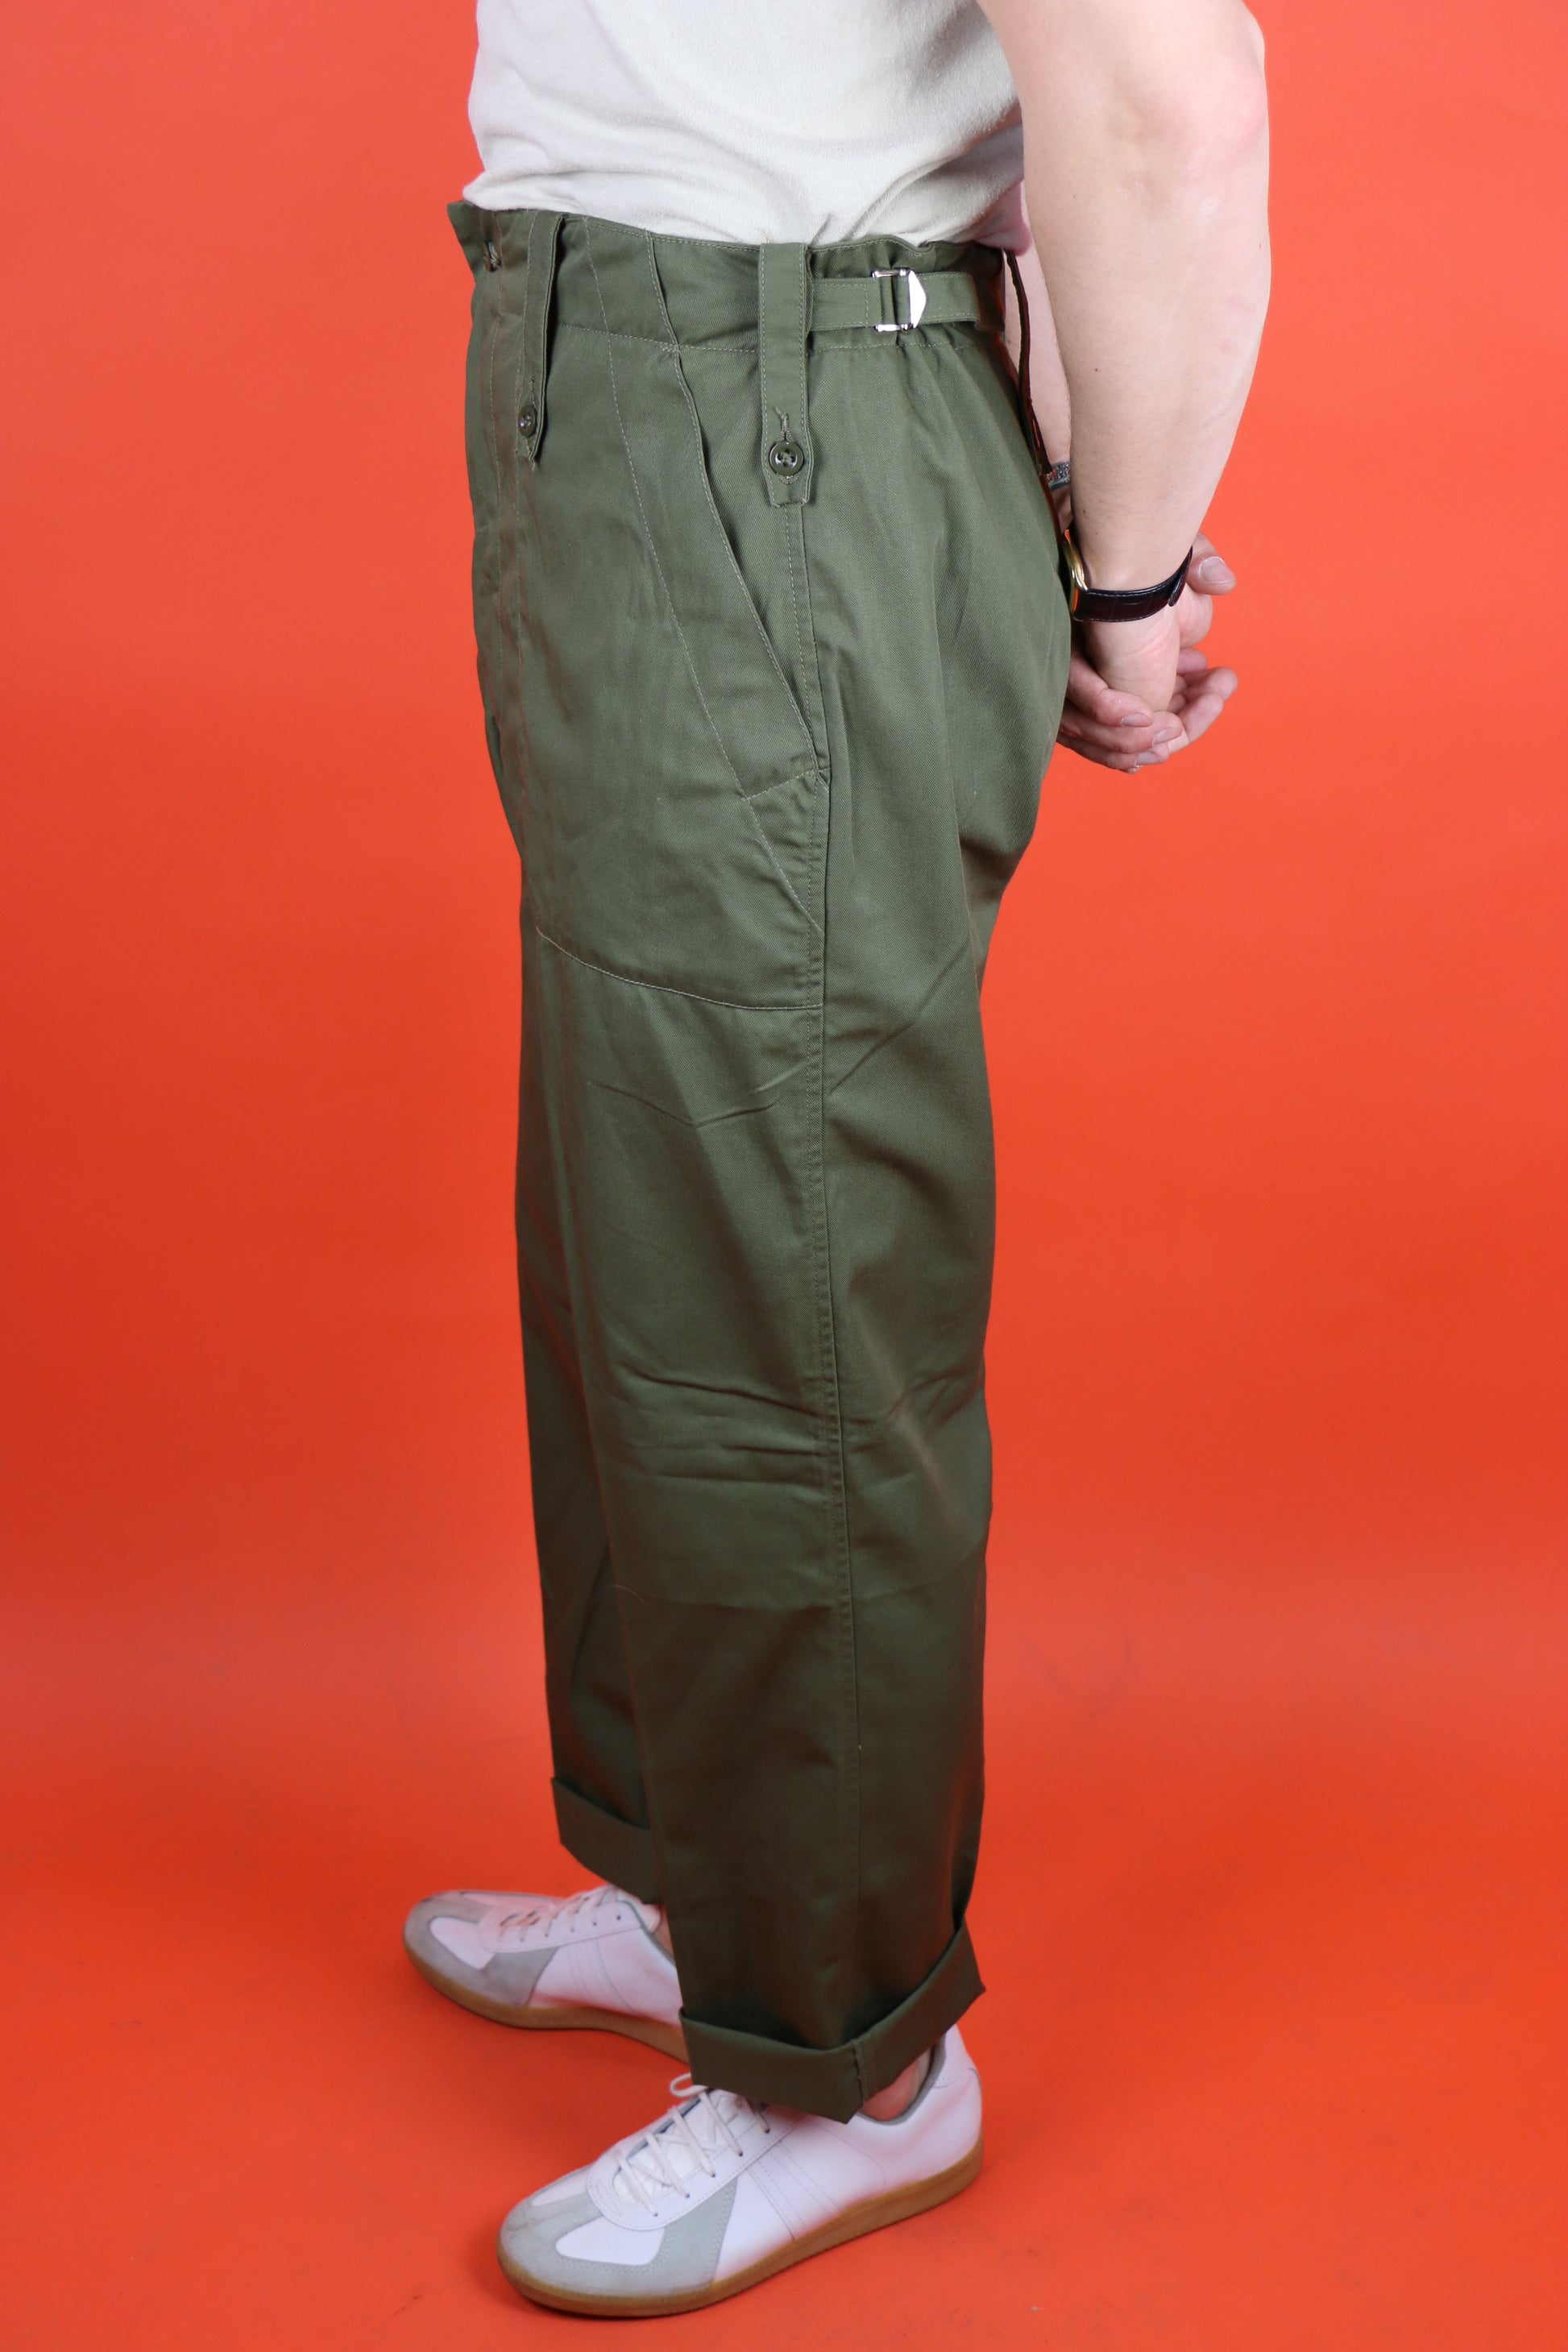 British Army Fatigue Pants - vintage clothing clochard92.com